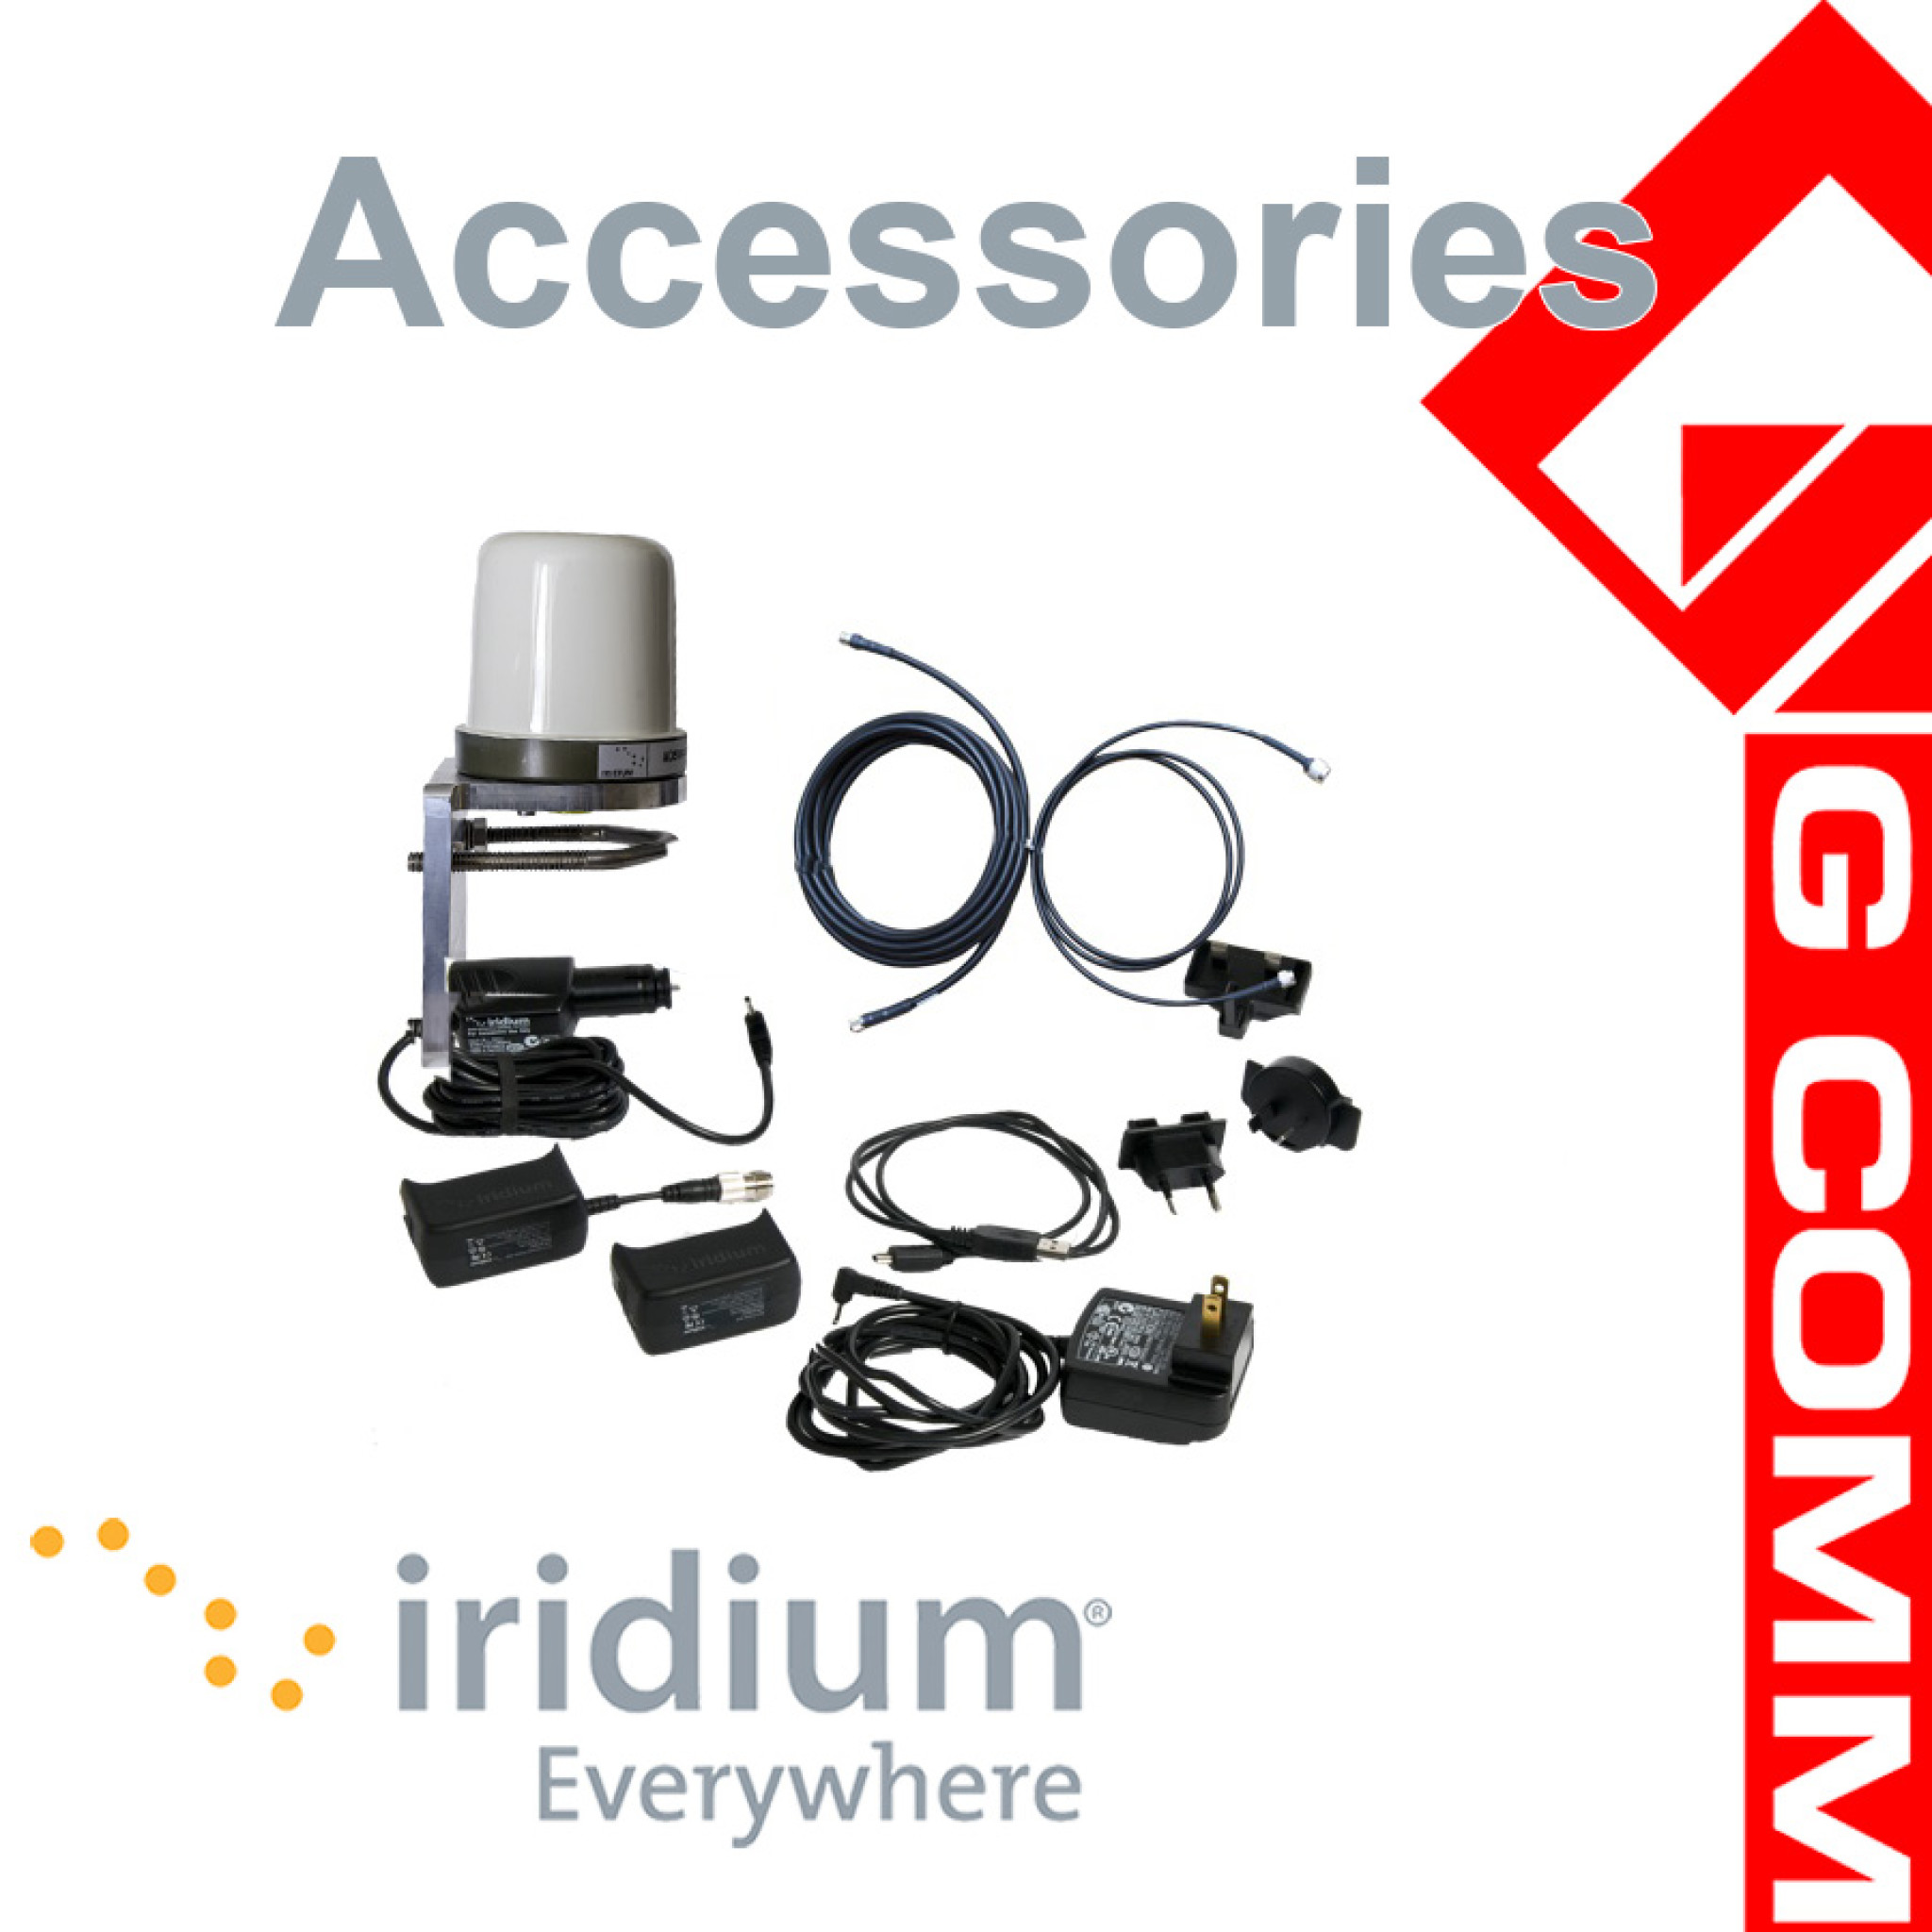 Iridium Accessories Category.jpg